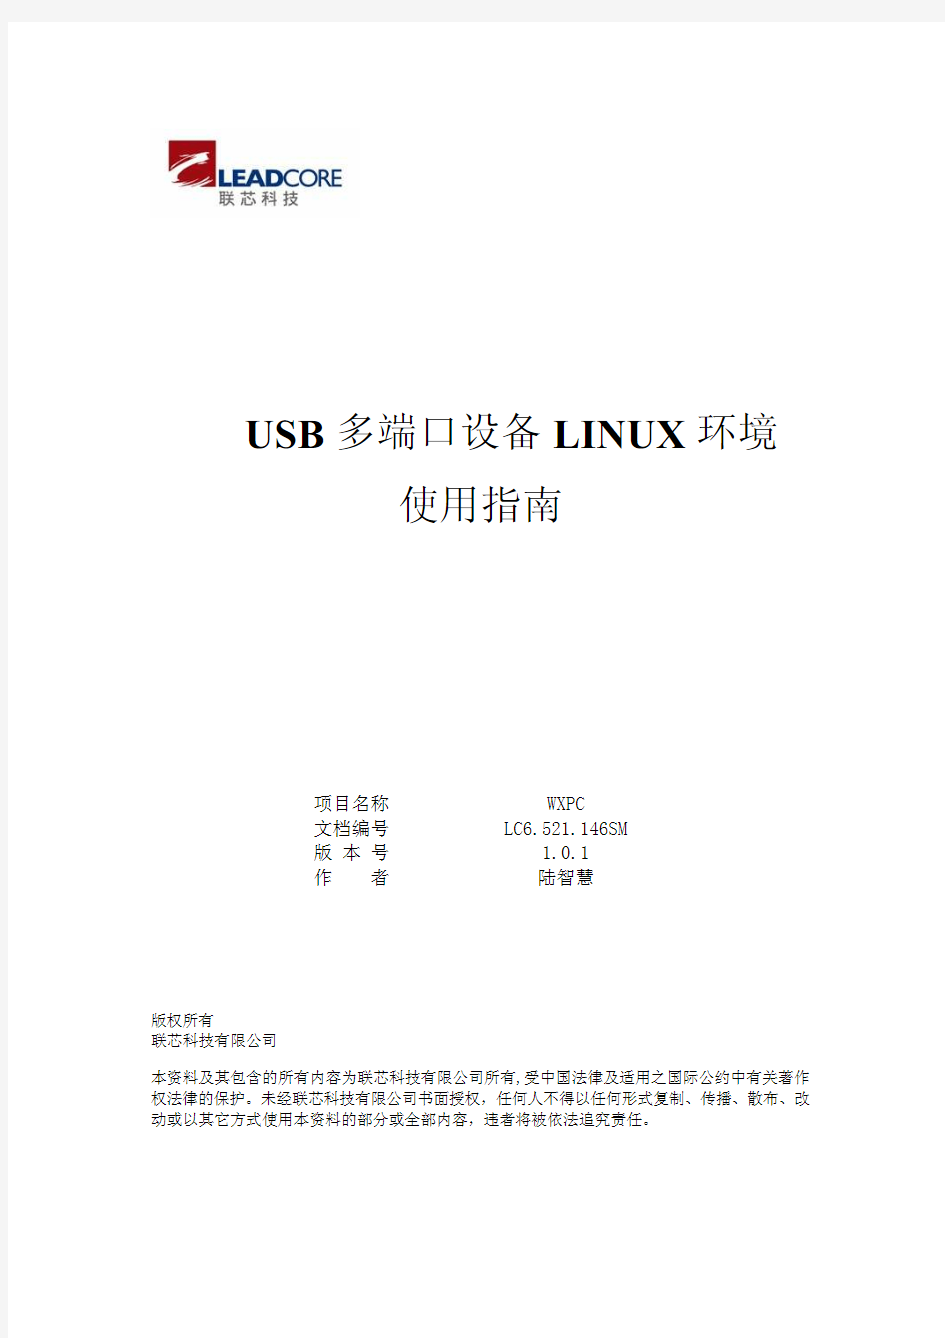 USB多端口设备LINUX环境使用指南